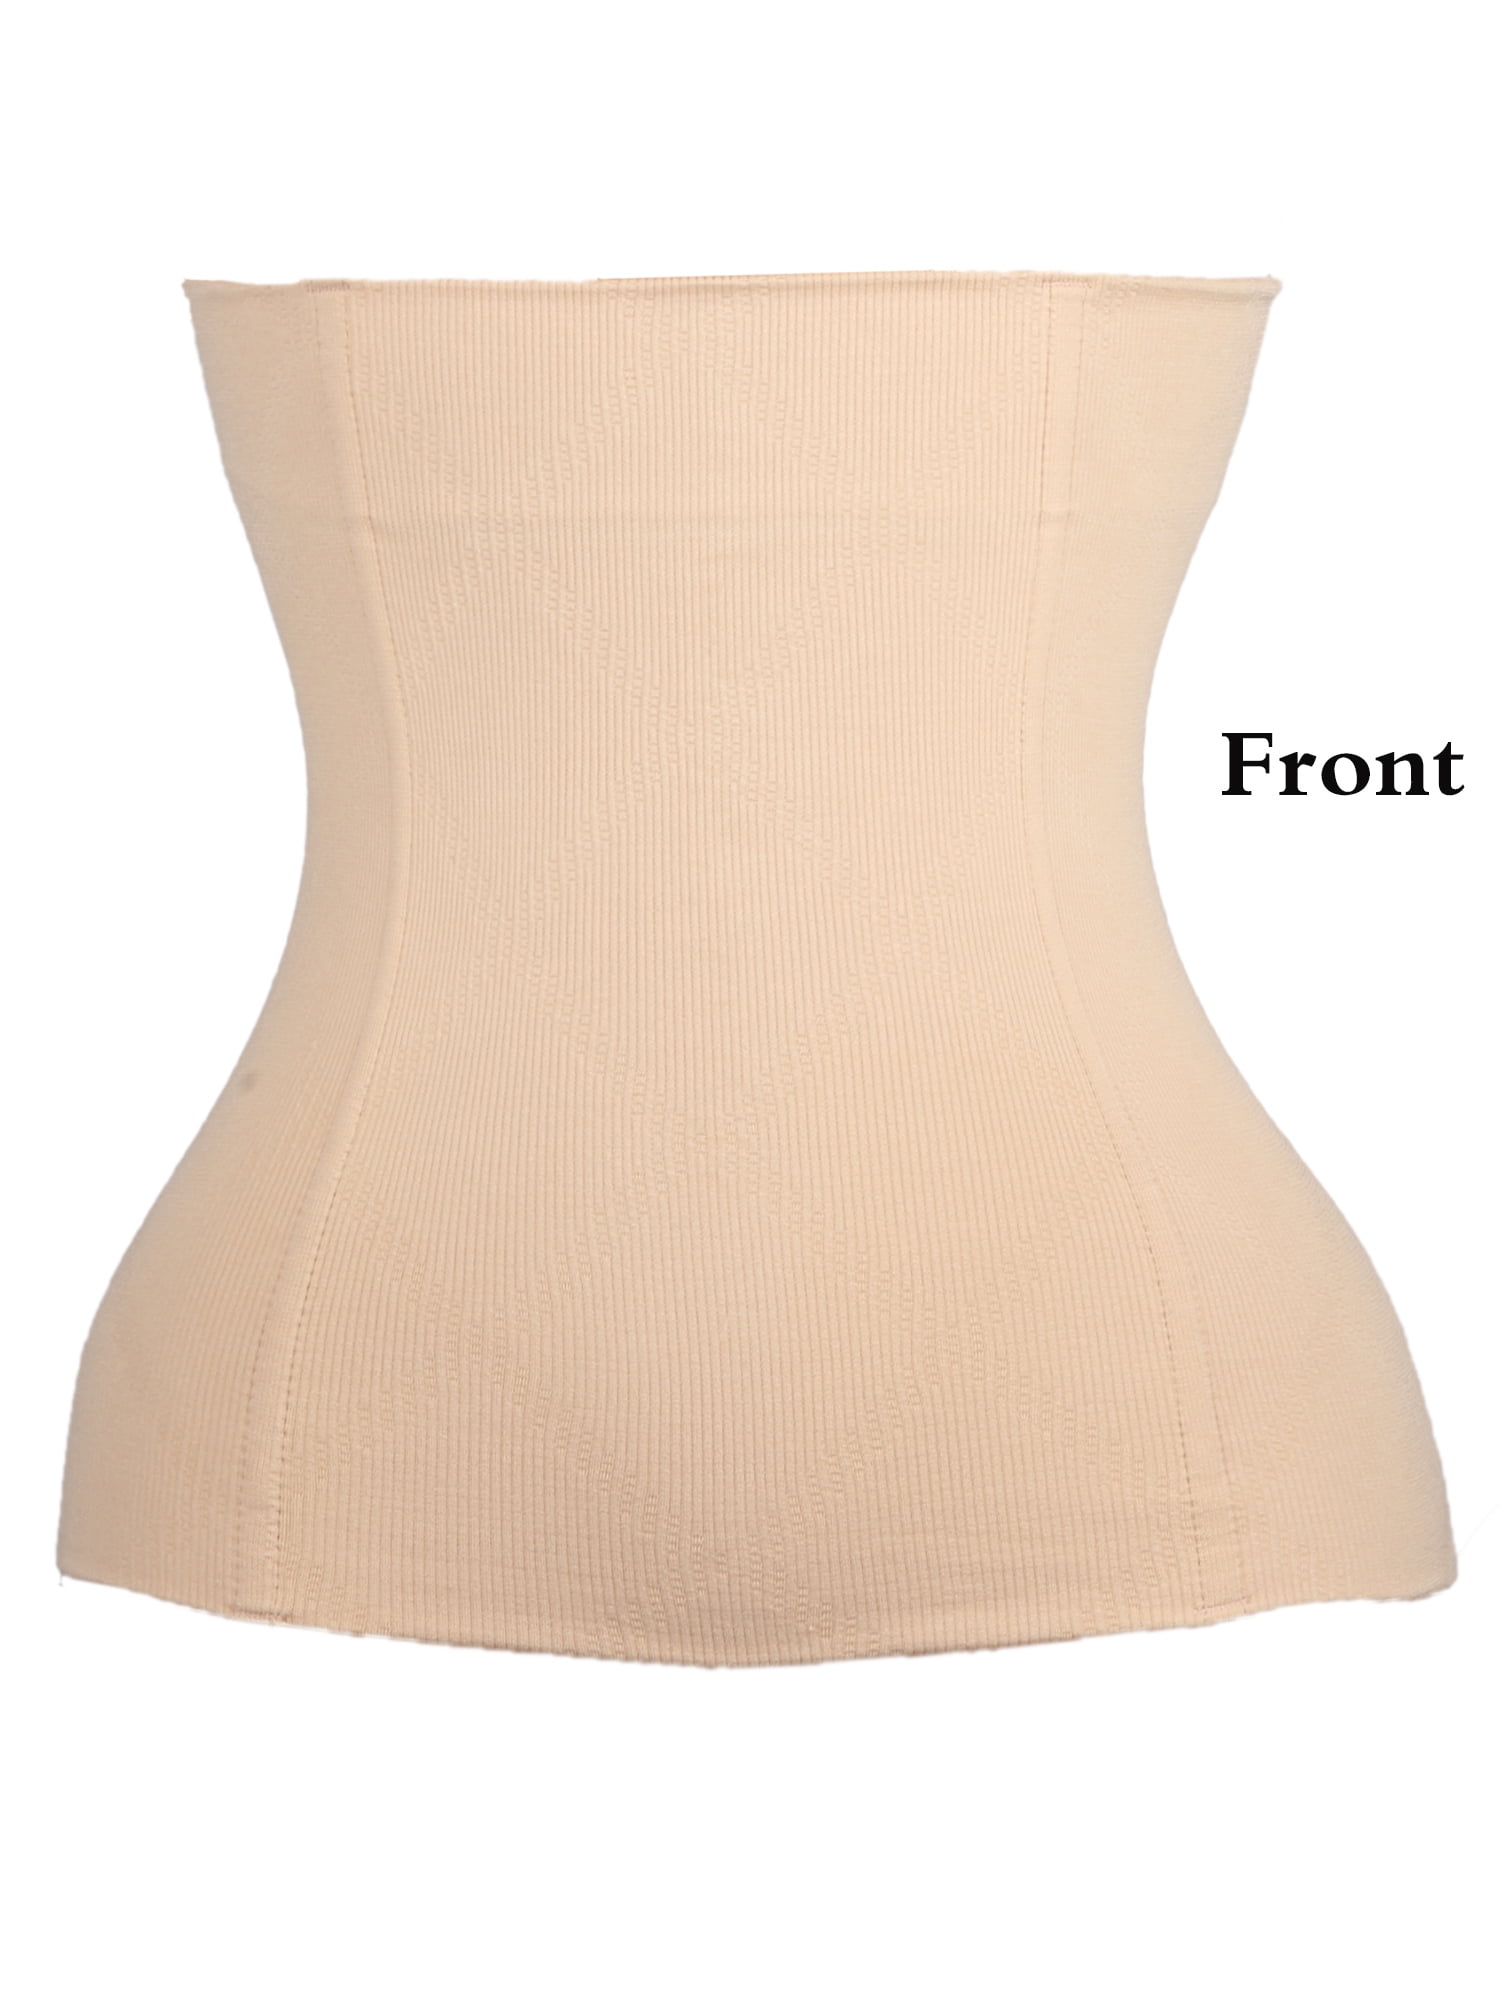 Women Waist Shapewear Belly Band Belt Body Shaper Cincher Tummy Control  Girdle Wrap Postpartum Support Slimming Recovery 